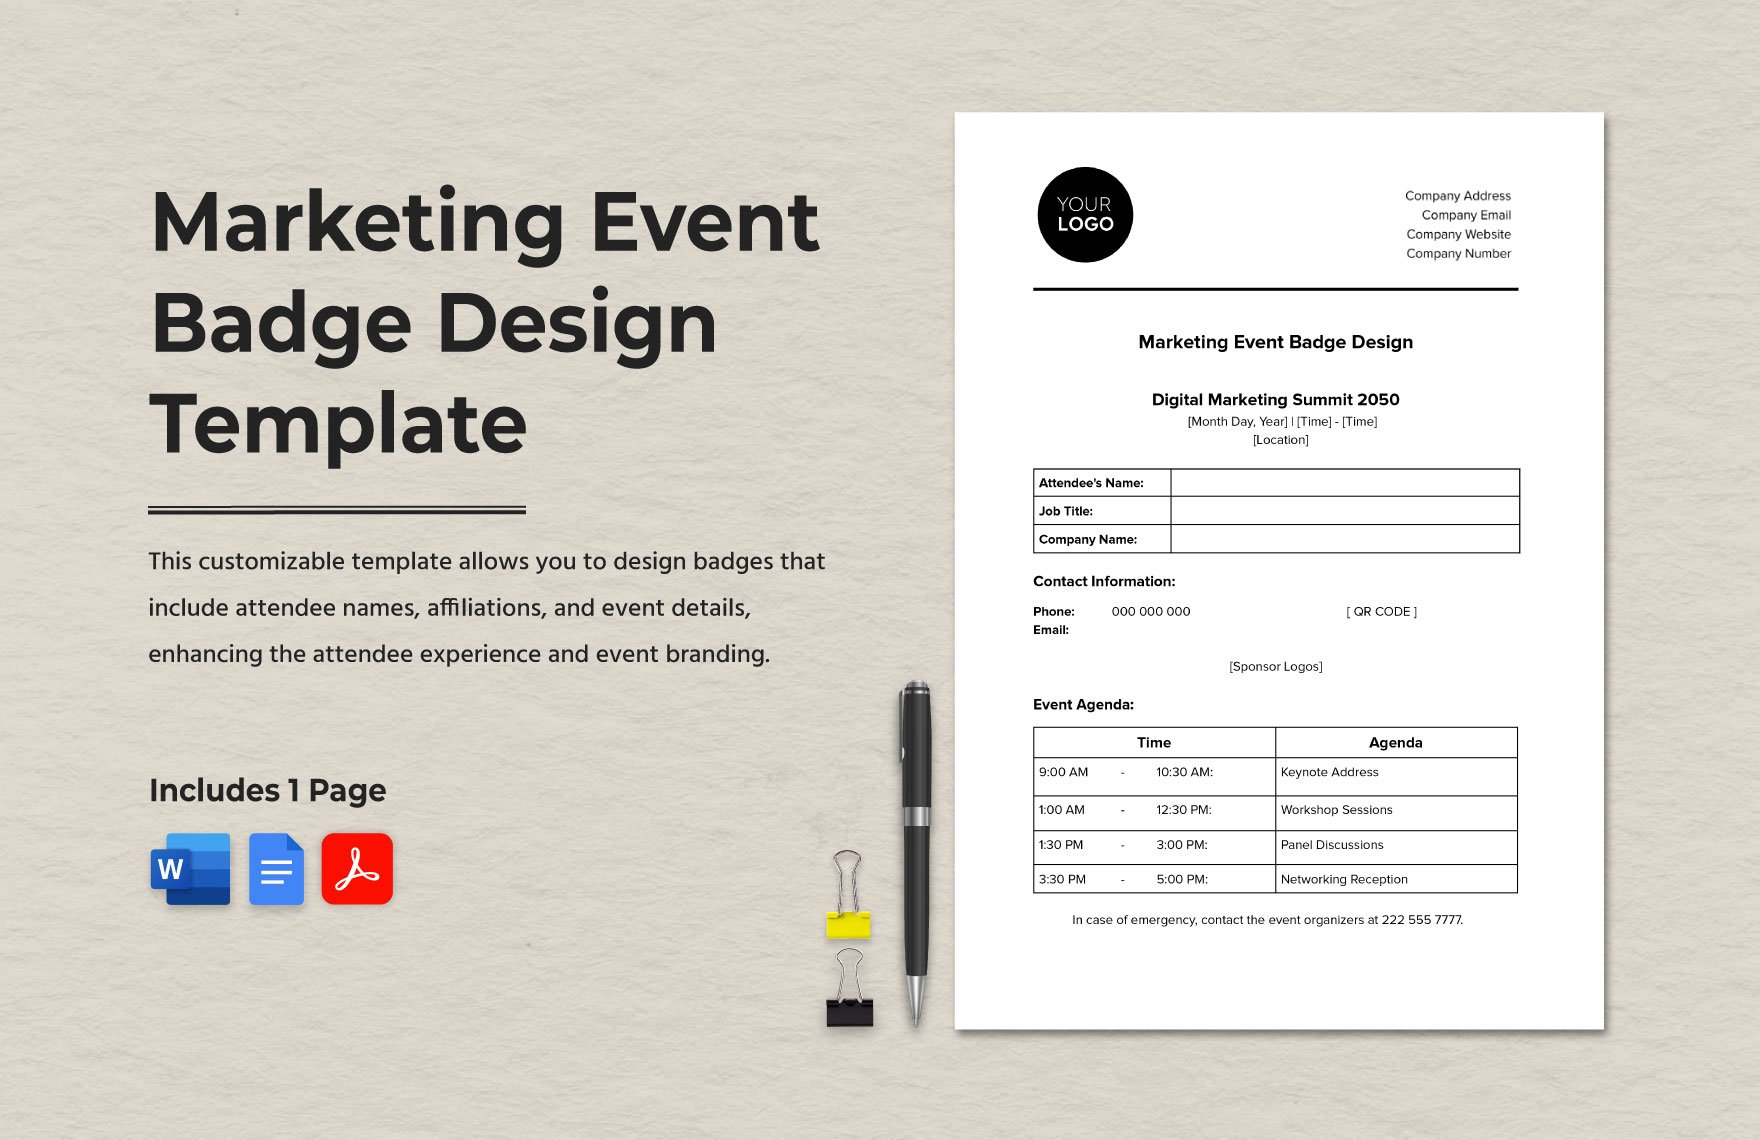 Marketing Event Badge Design Template in Word, Google Docs, PDF